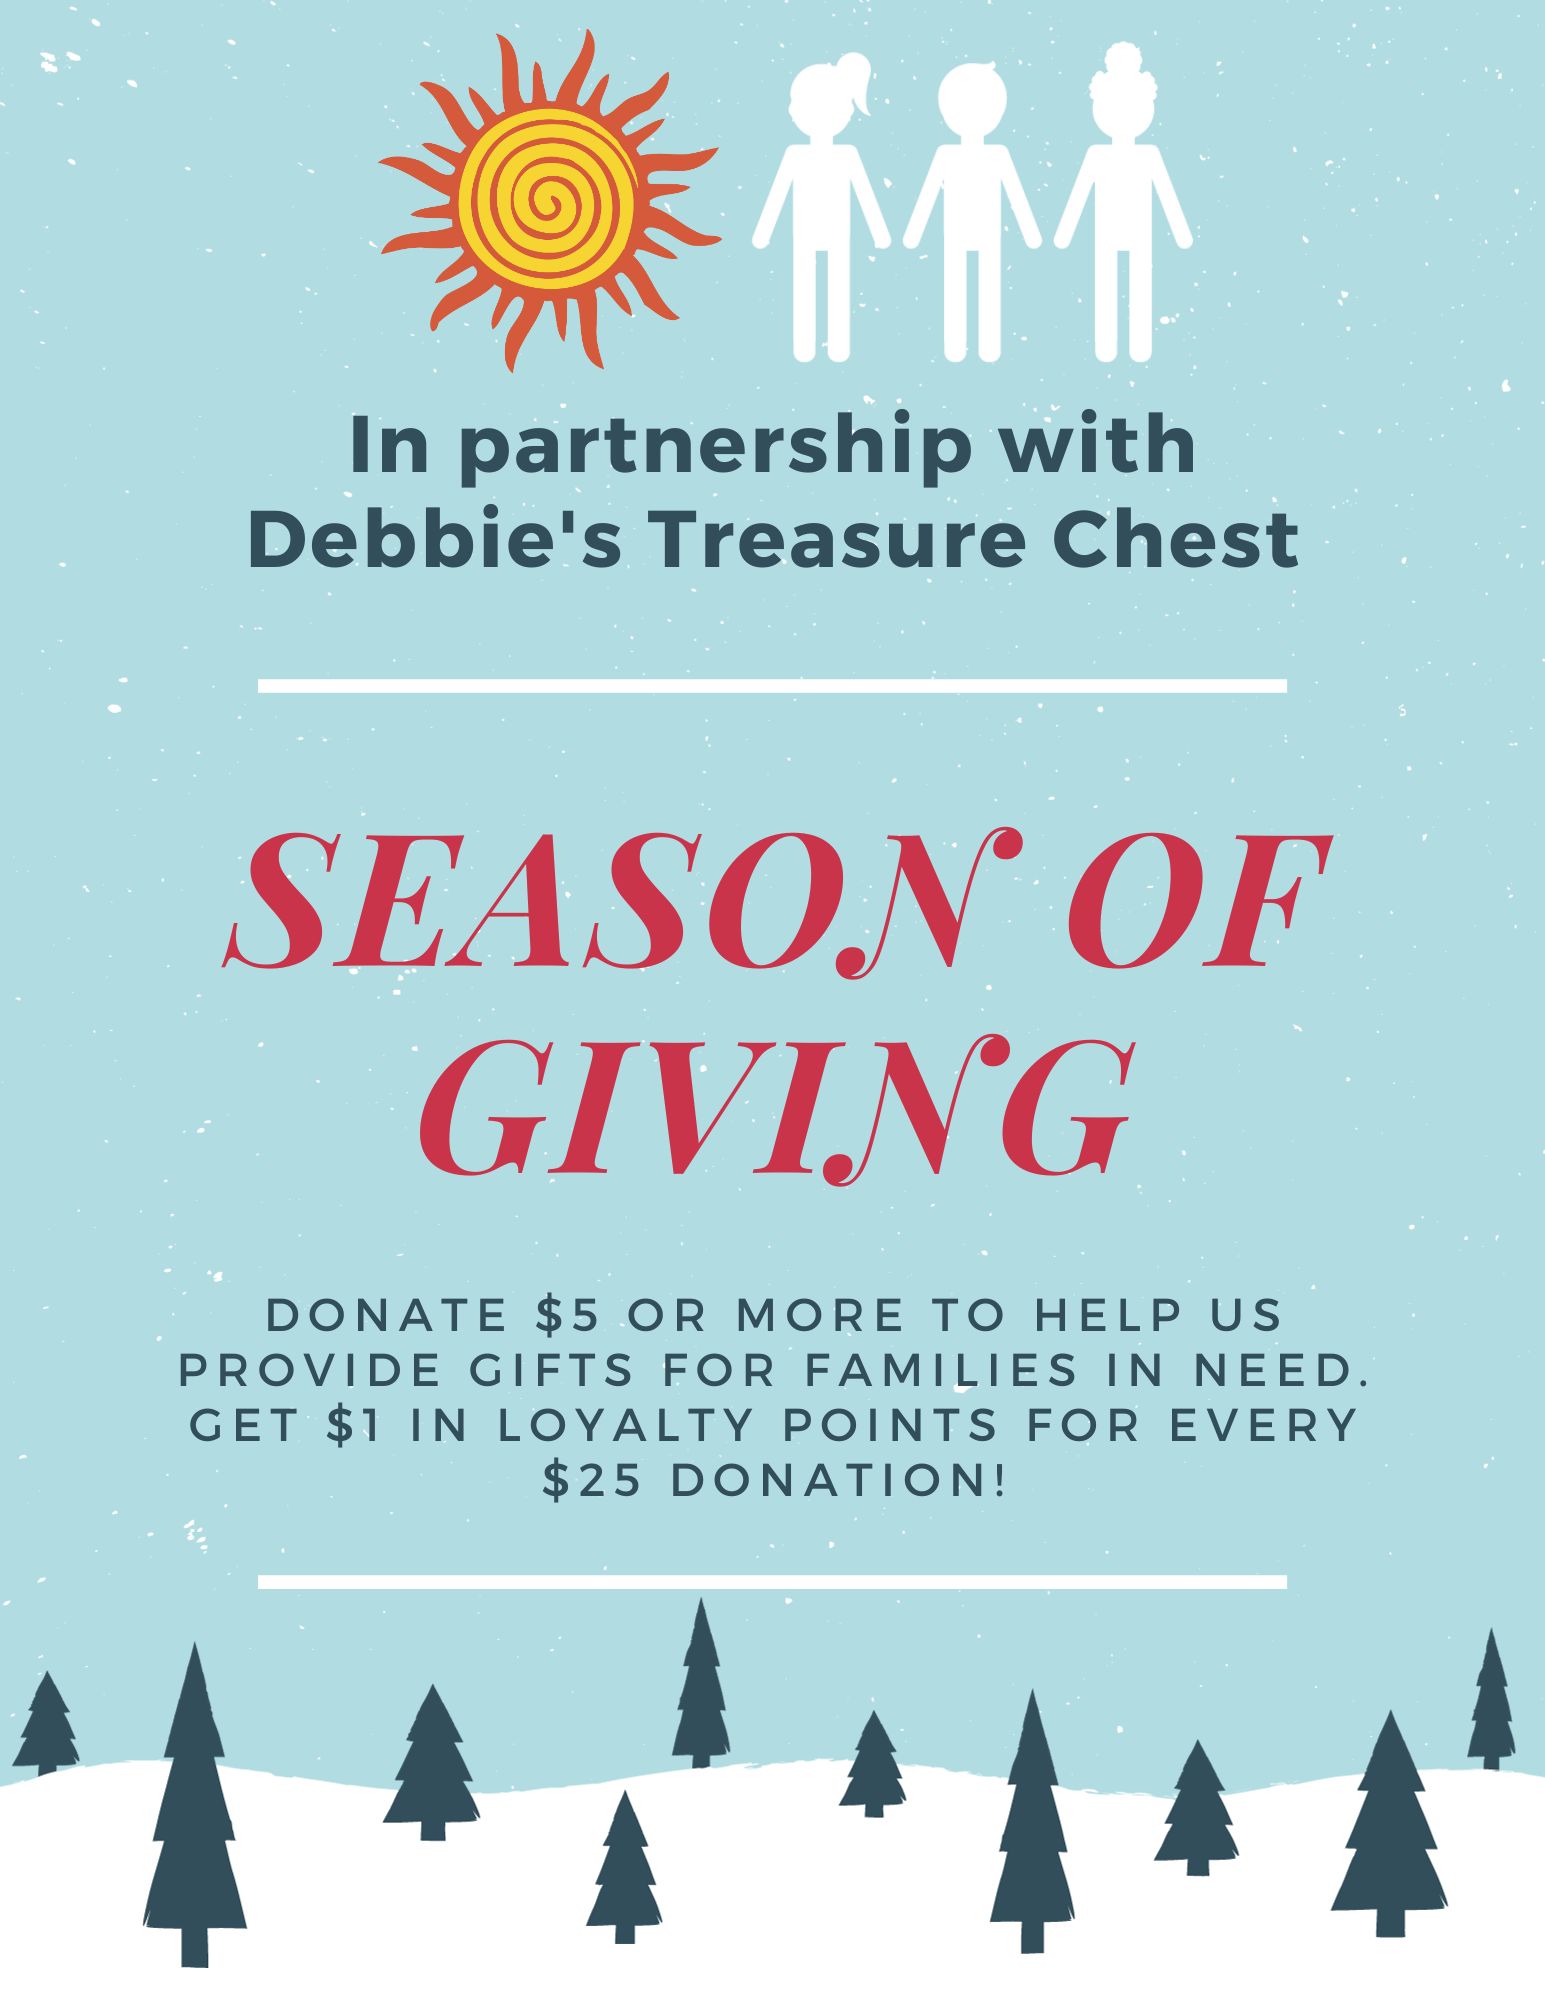 Season of Giving $5 Donation